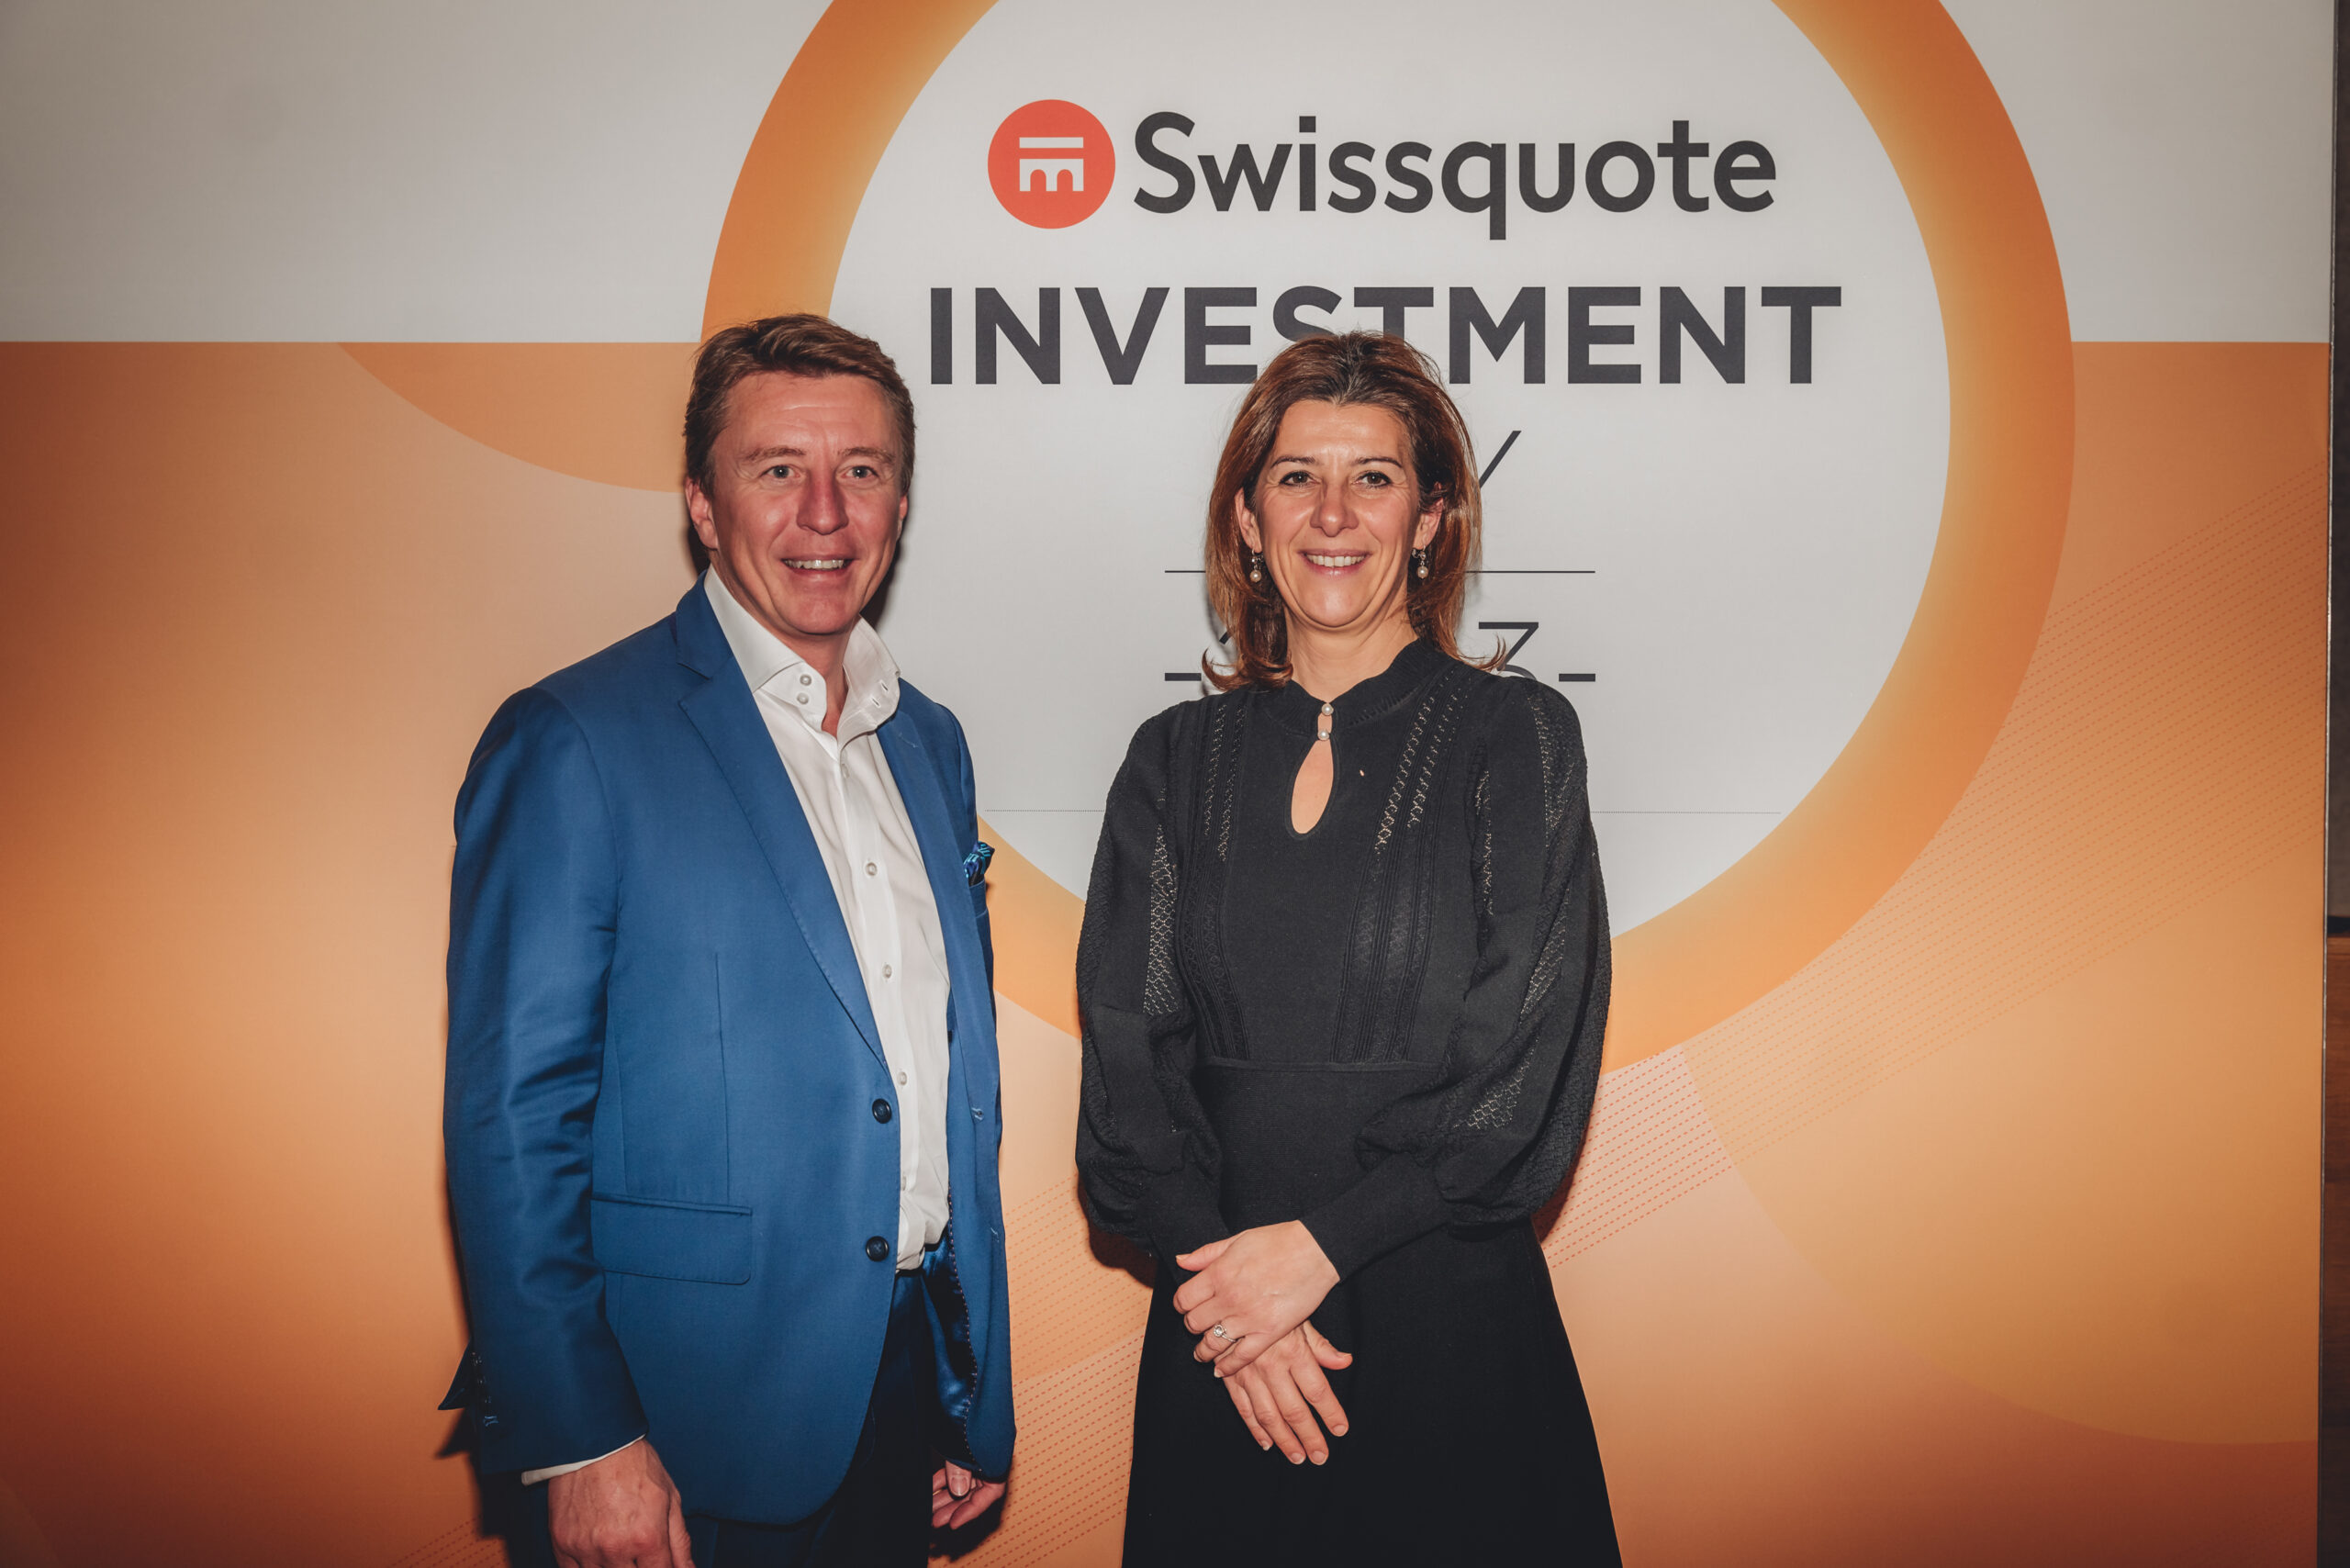 Swissquote Investment day